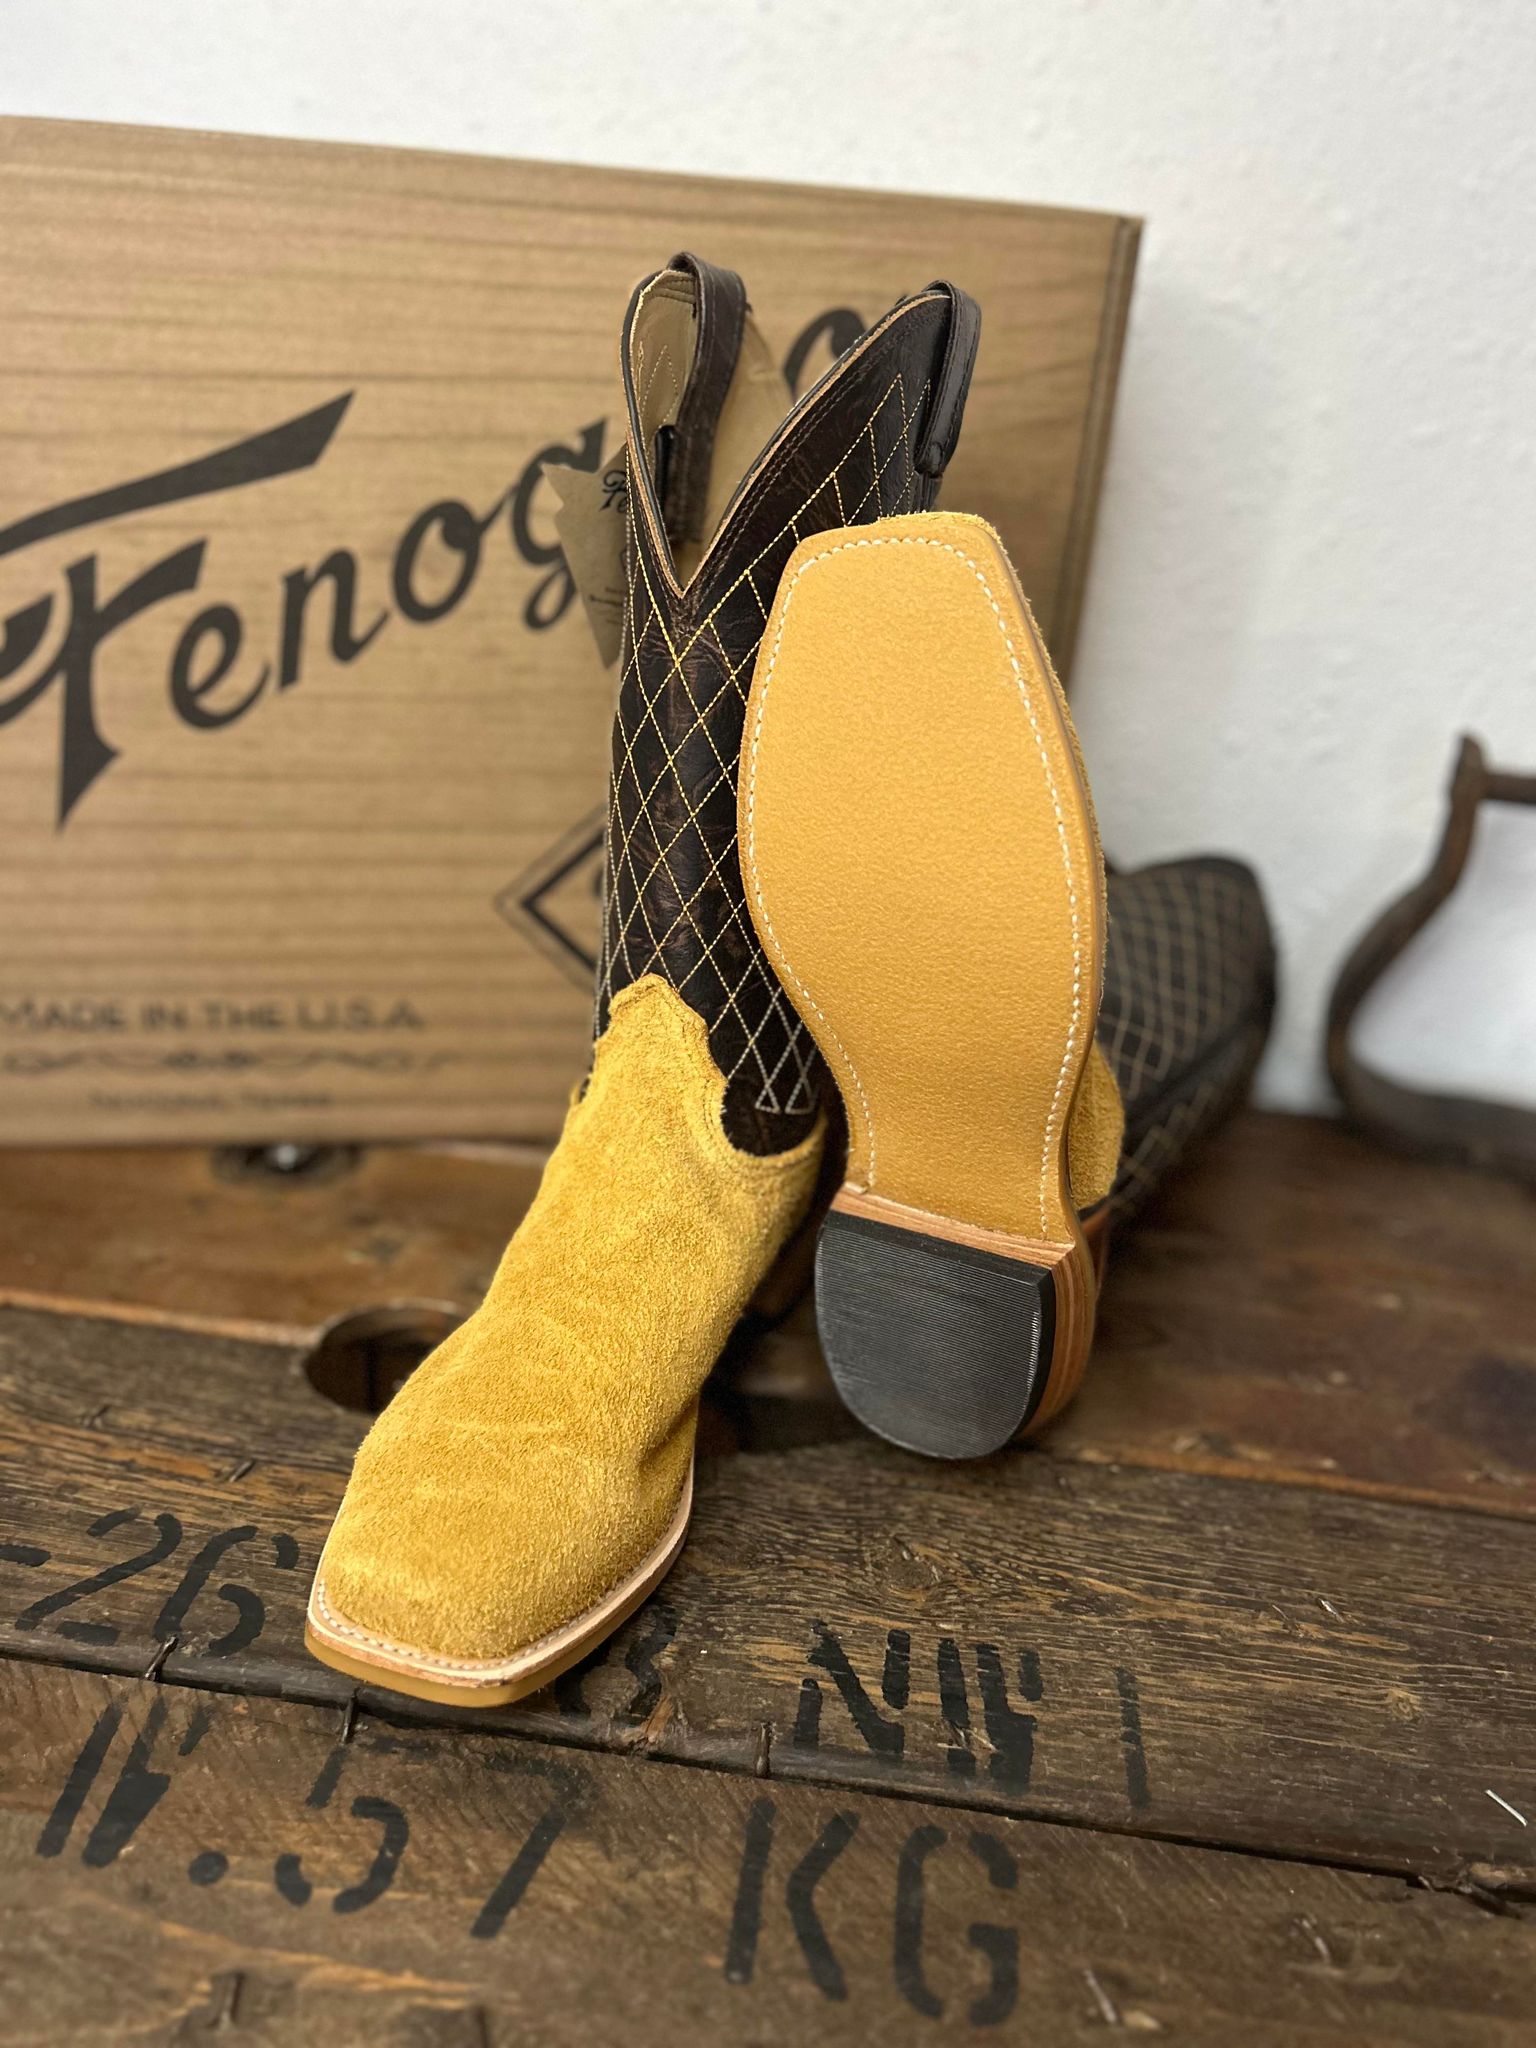 Men's Fenoglio Desert Sahara Roughout & Kenya Crunch Boots-Men's Boots-Fenoglio Boots-Lucky J Boots & More, Women's, Men's, & Kids Western Store Located in Carthage, MO